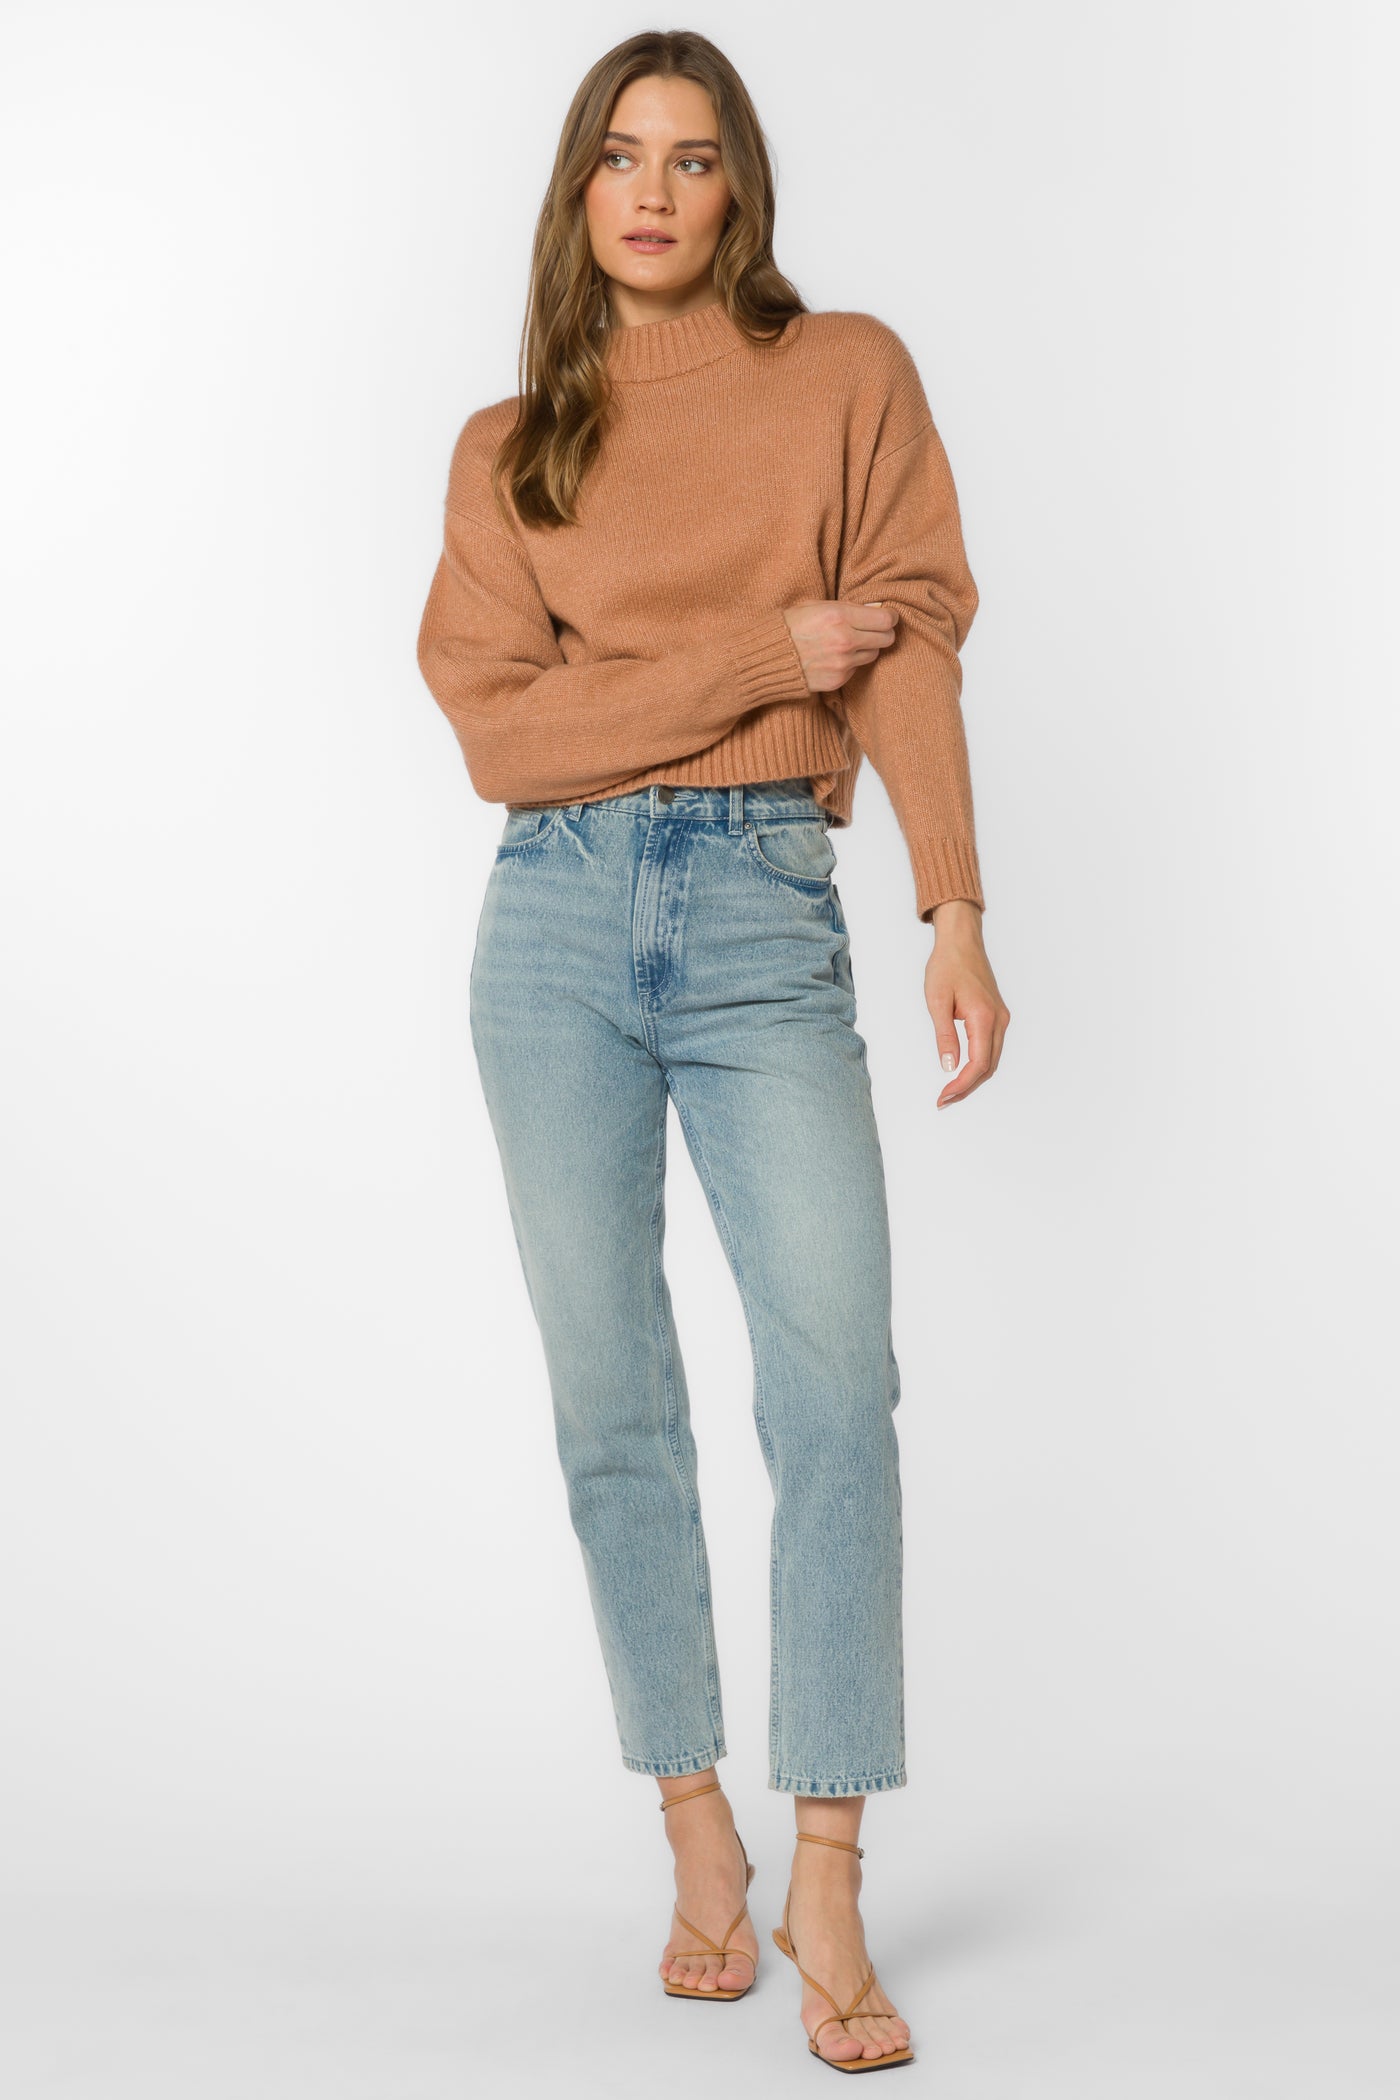 Whitley Maple Sweater - Sweaters - Velvet Heart Clothing